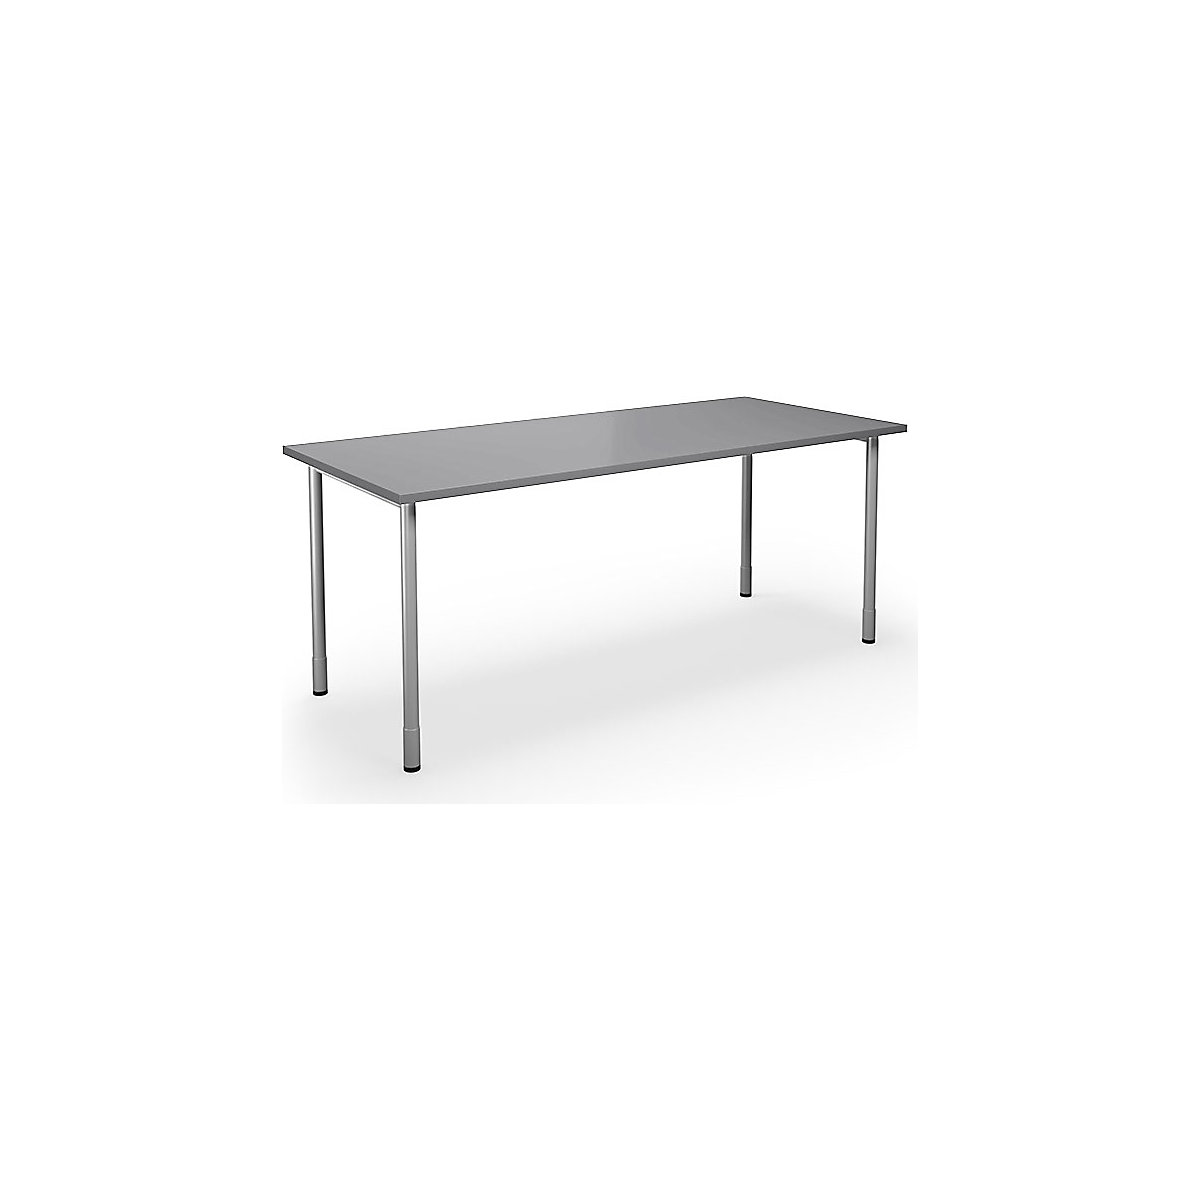 DUO-C multi-purpose desk, straight tabletop, WxD 1800 x 800 mm, light grey, silver-13